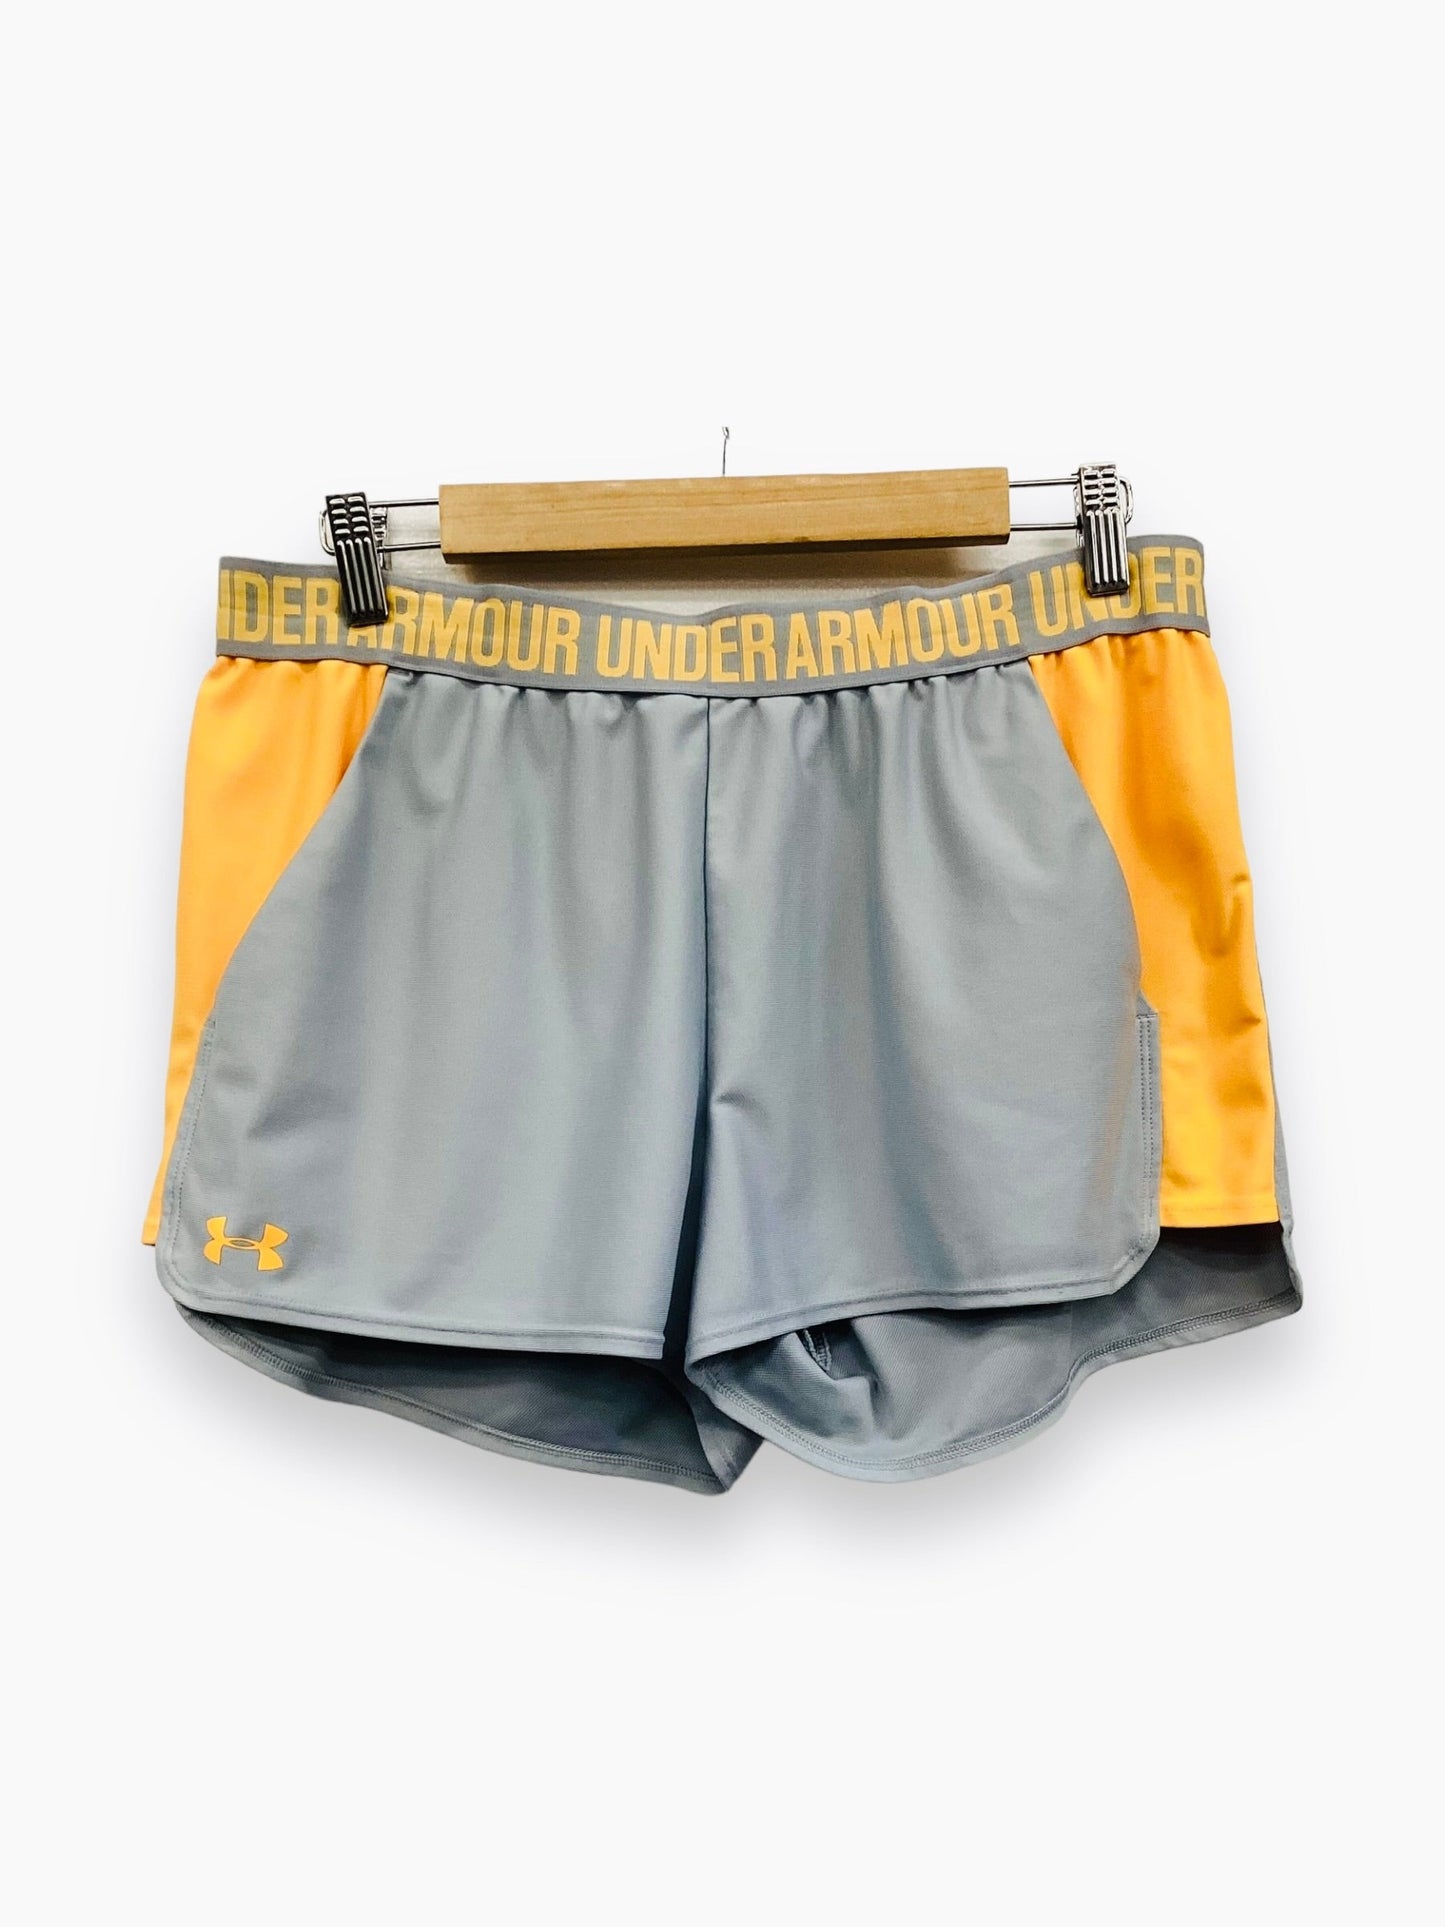 Grey Athletic Shorts Under Armour, Size Xl